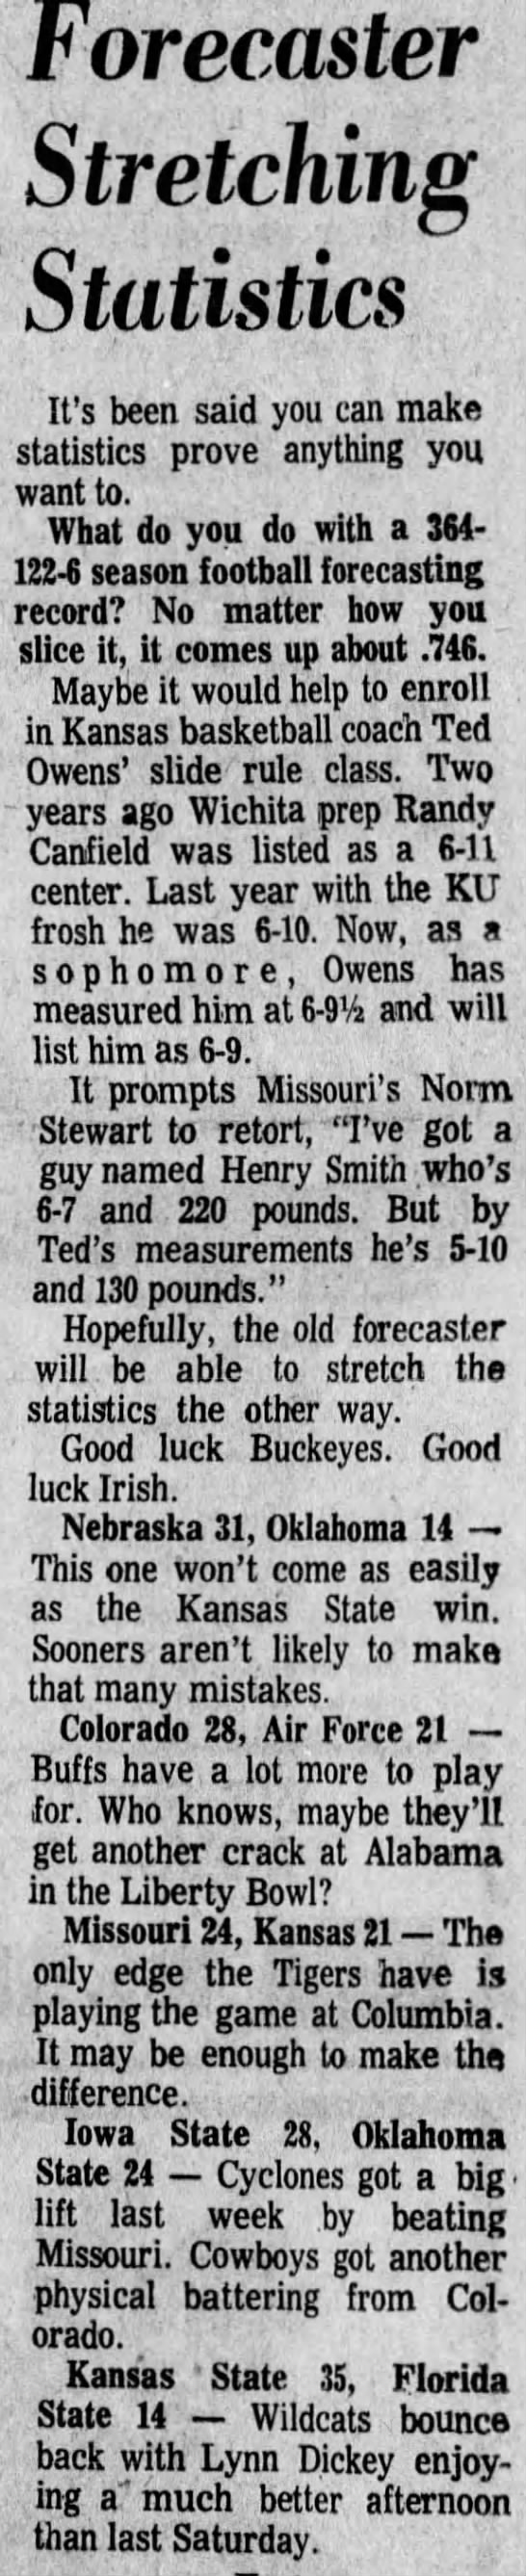 1970.11.20 Don Forsythe predictions, Oklahoma week - 